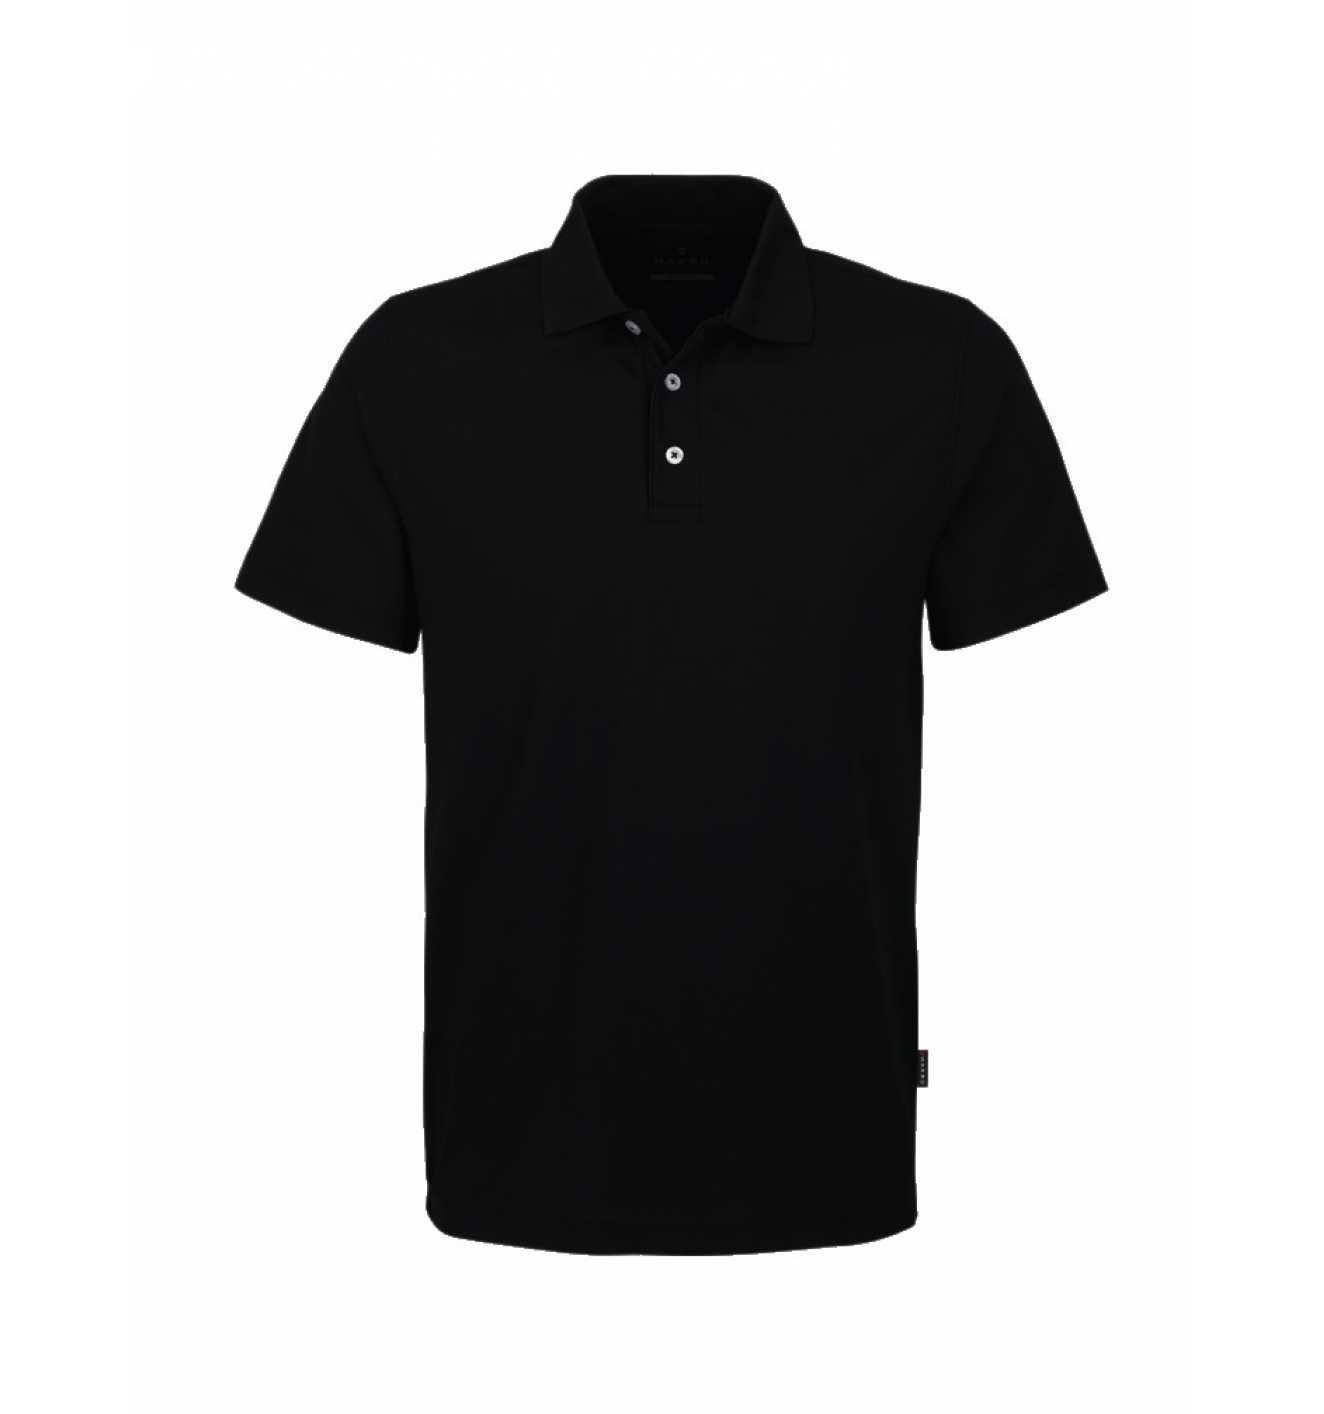 Hakro Poloshirt Coolmax #806 Herren (Kein Set, 1-tlg., 1er-Pack) sportlich körpernah geschnitten schwarz